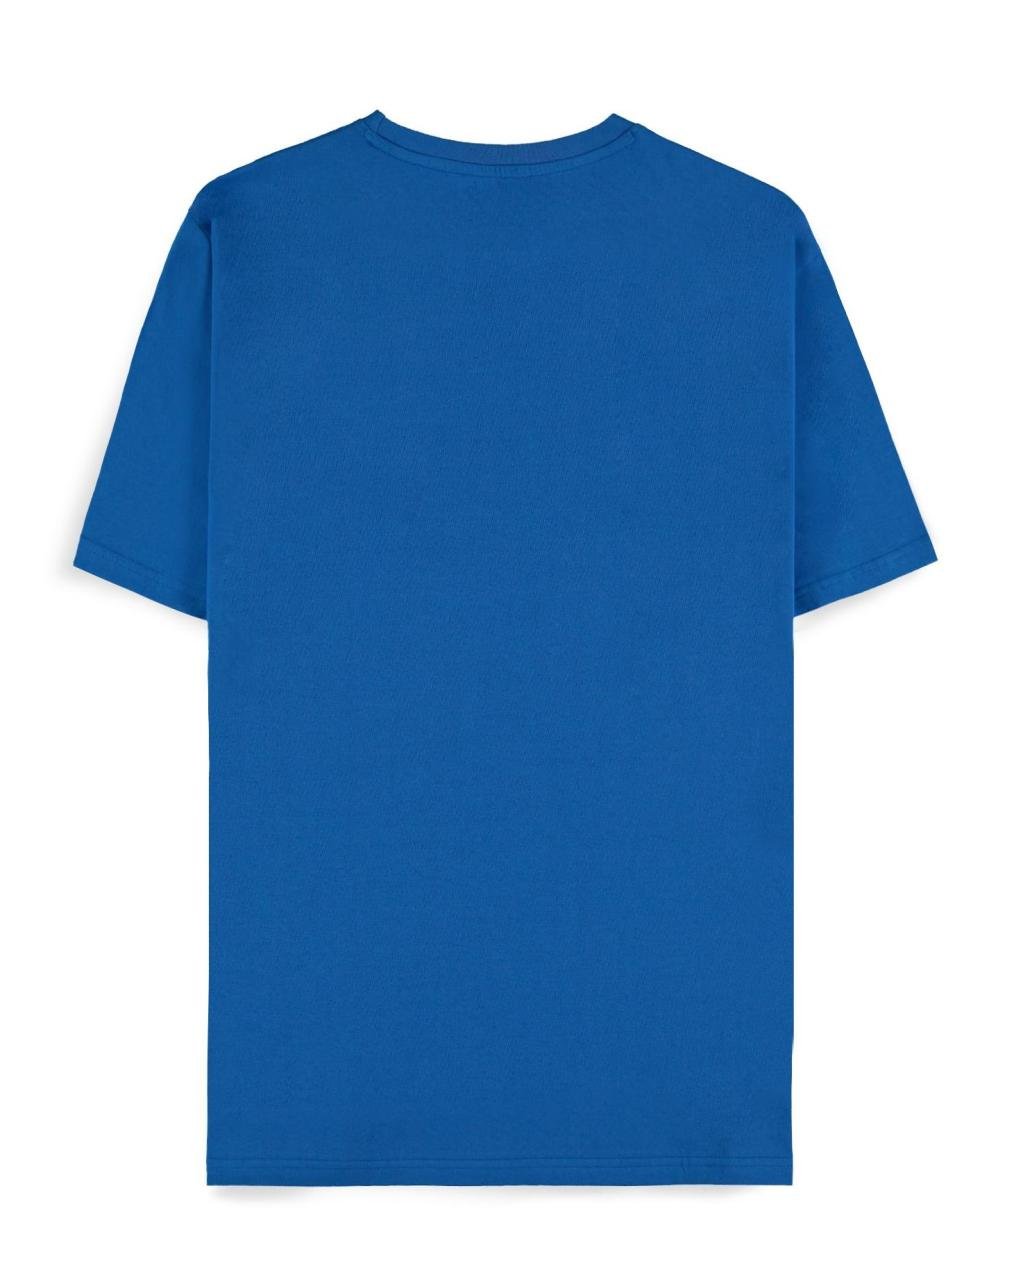 POKEMON - Blue Squirtle - Men's T-shirt (S)